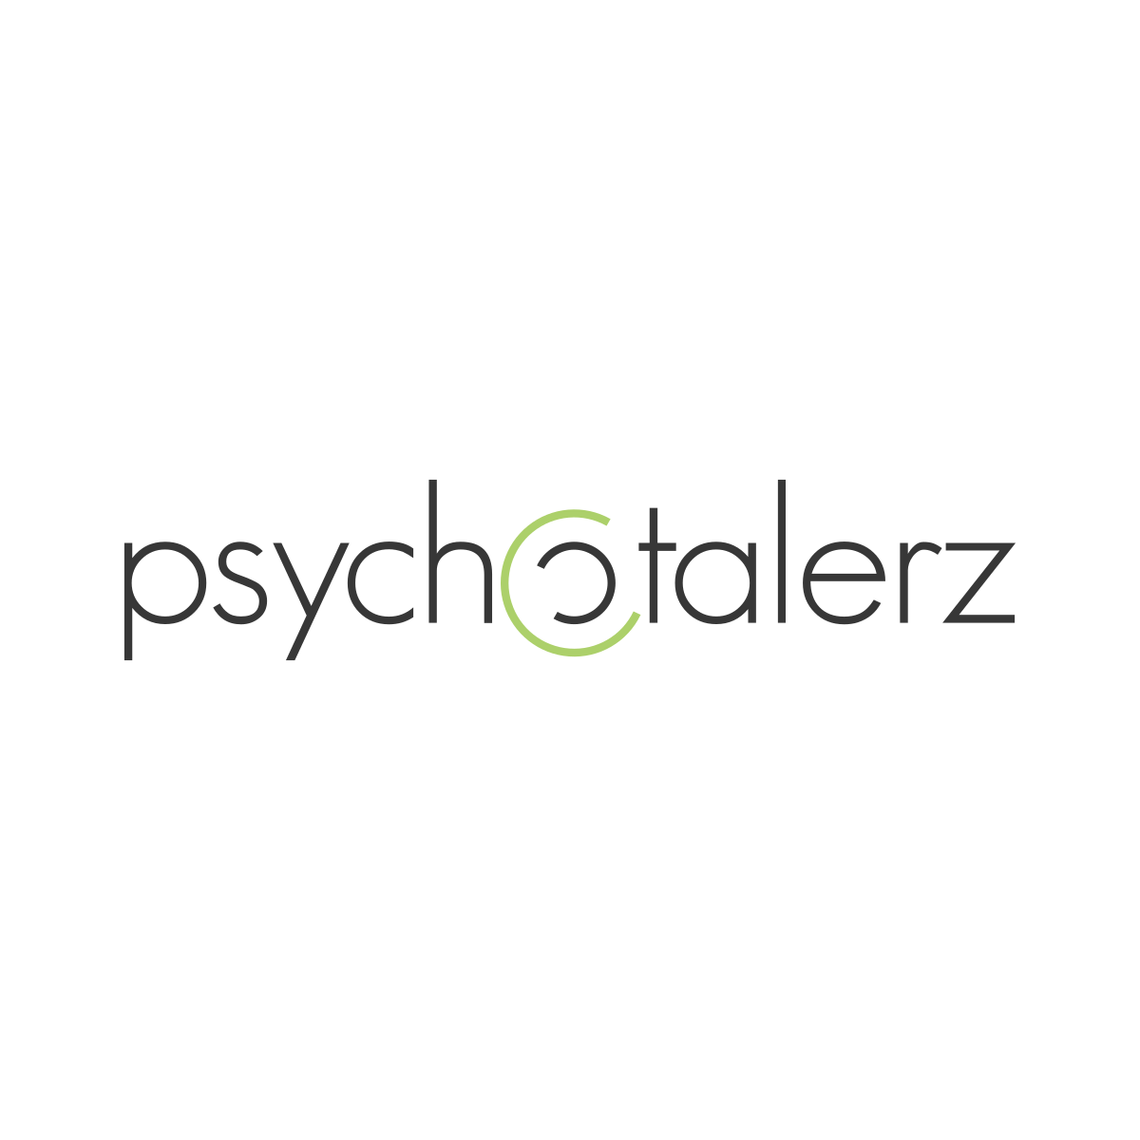 Psychotalerz